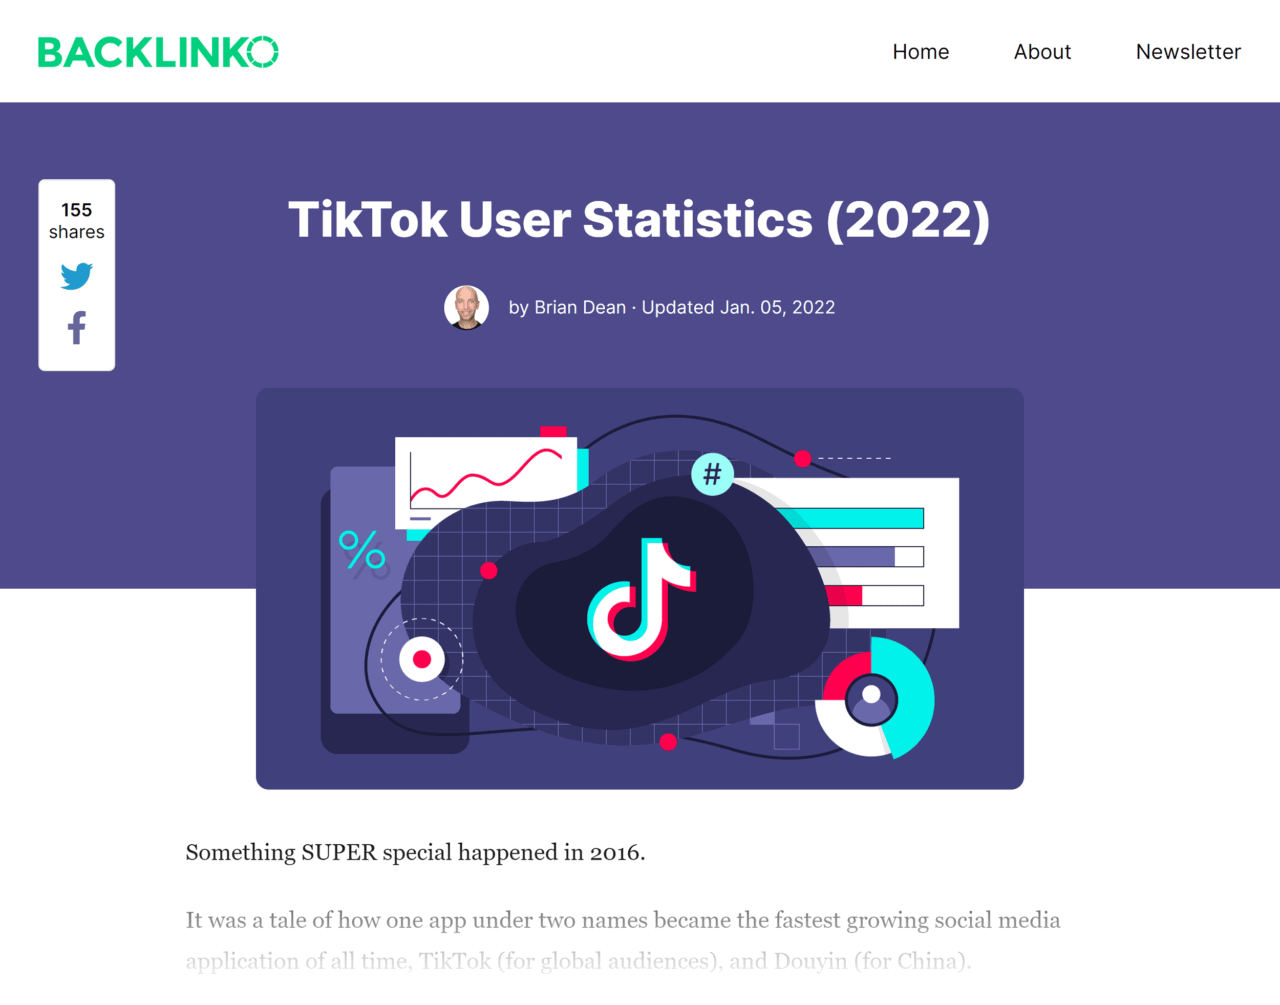 Backlinko article on TikTok User Statistics 2022